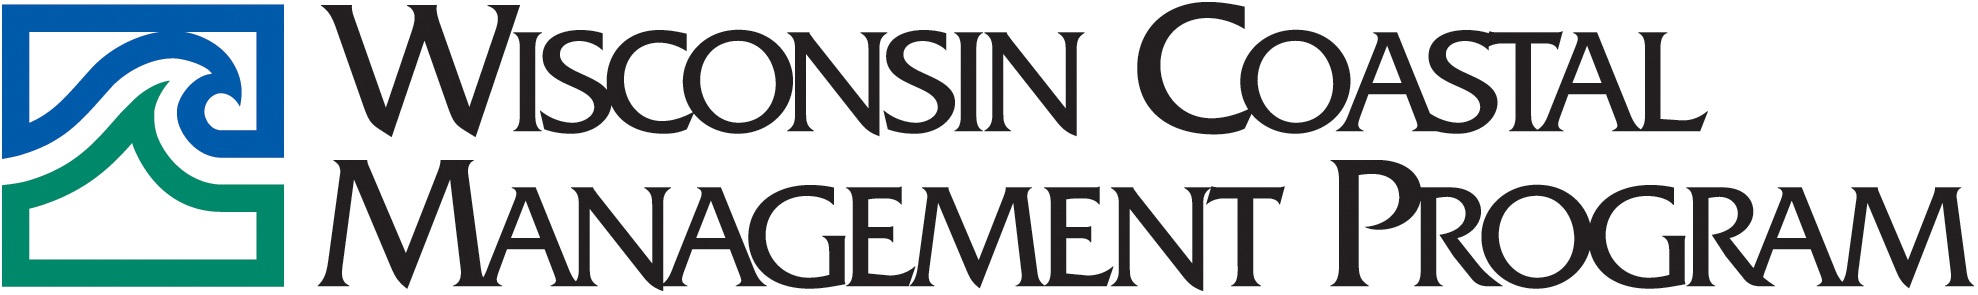 Wisconsin Coastal Management Program